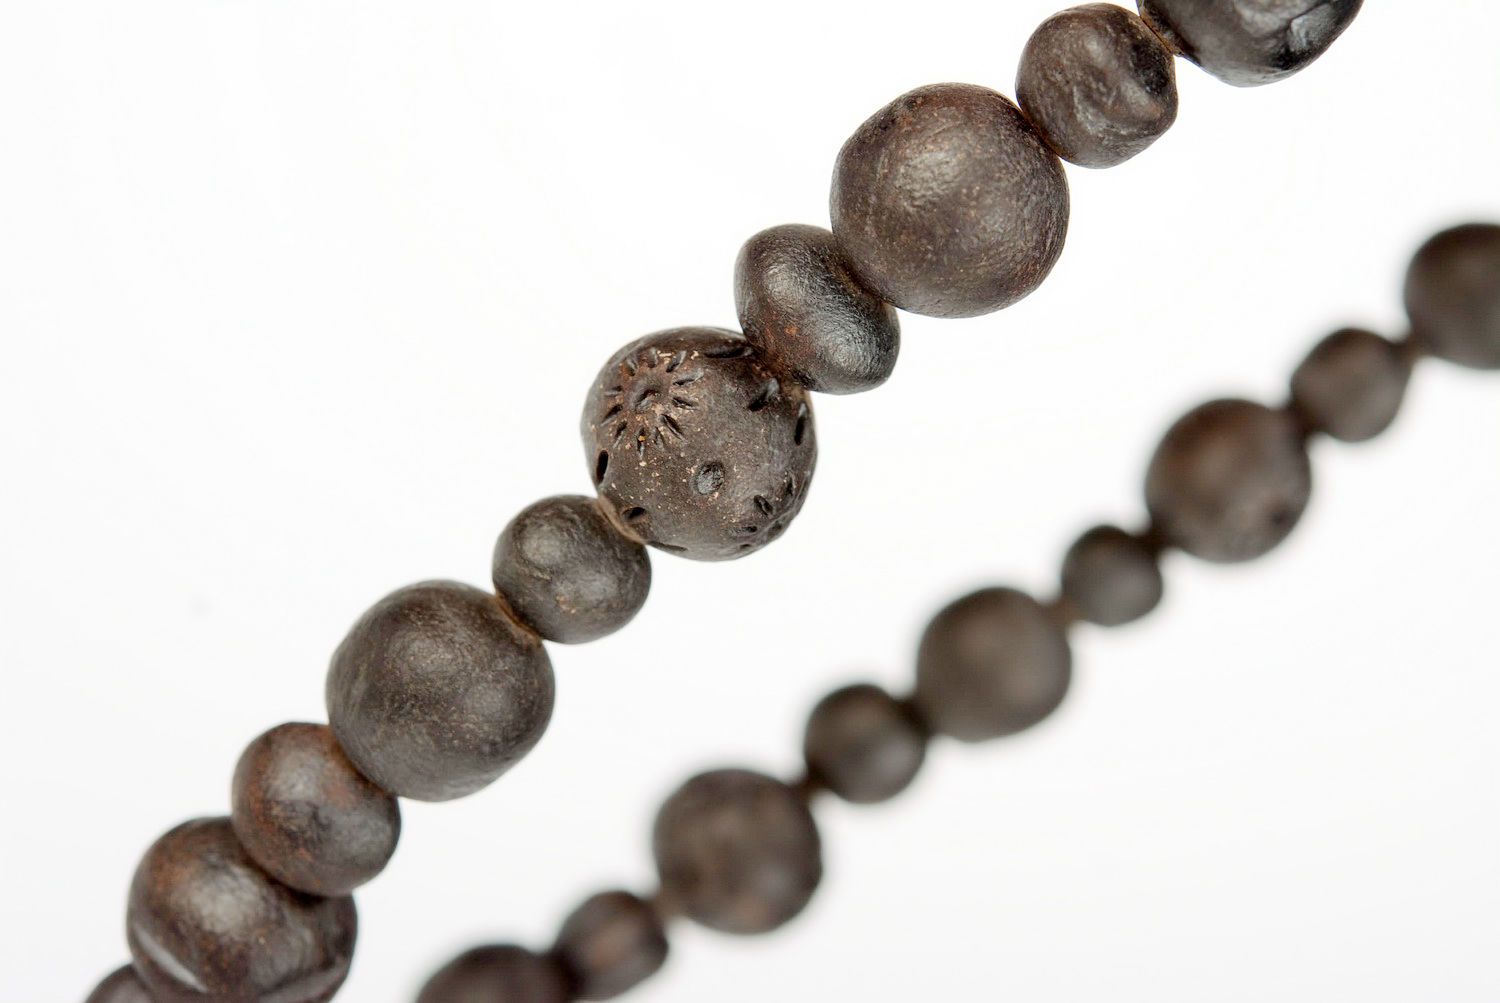 Clay bead necklace photo 1